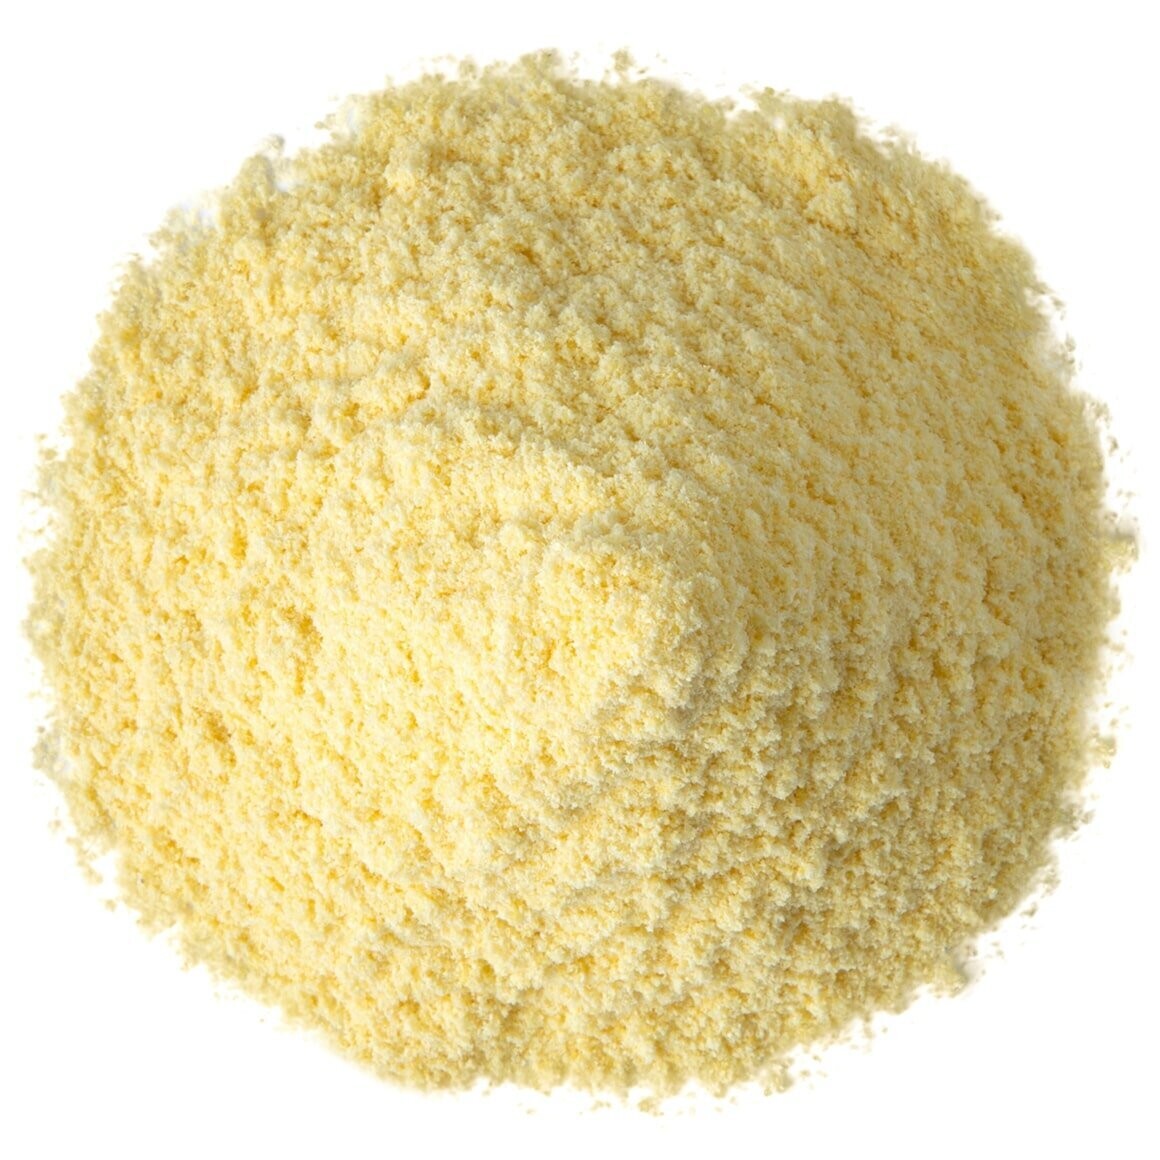 203 Corn Flour Organic - 1 lb. (FF1)